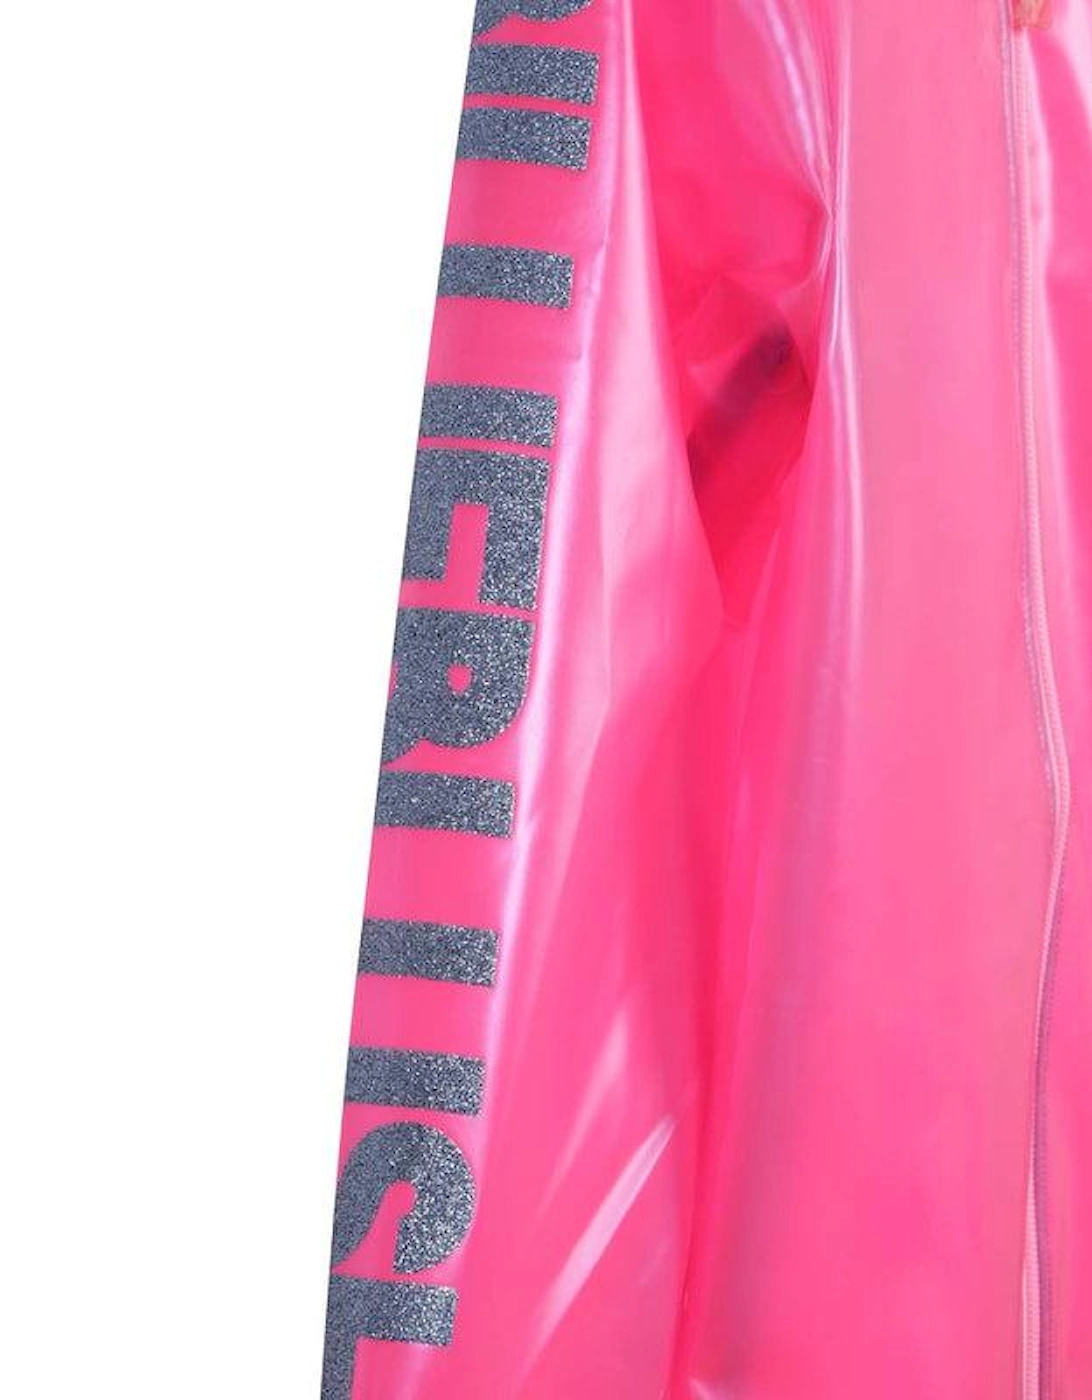 Girls Pink Transparent Rain Coat